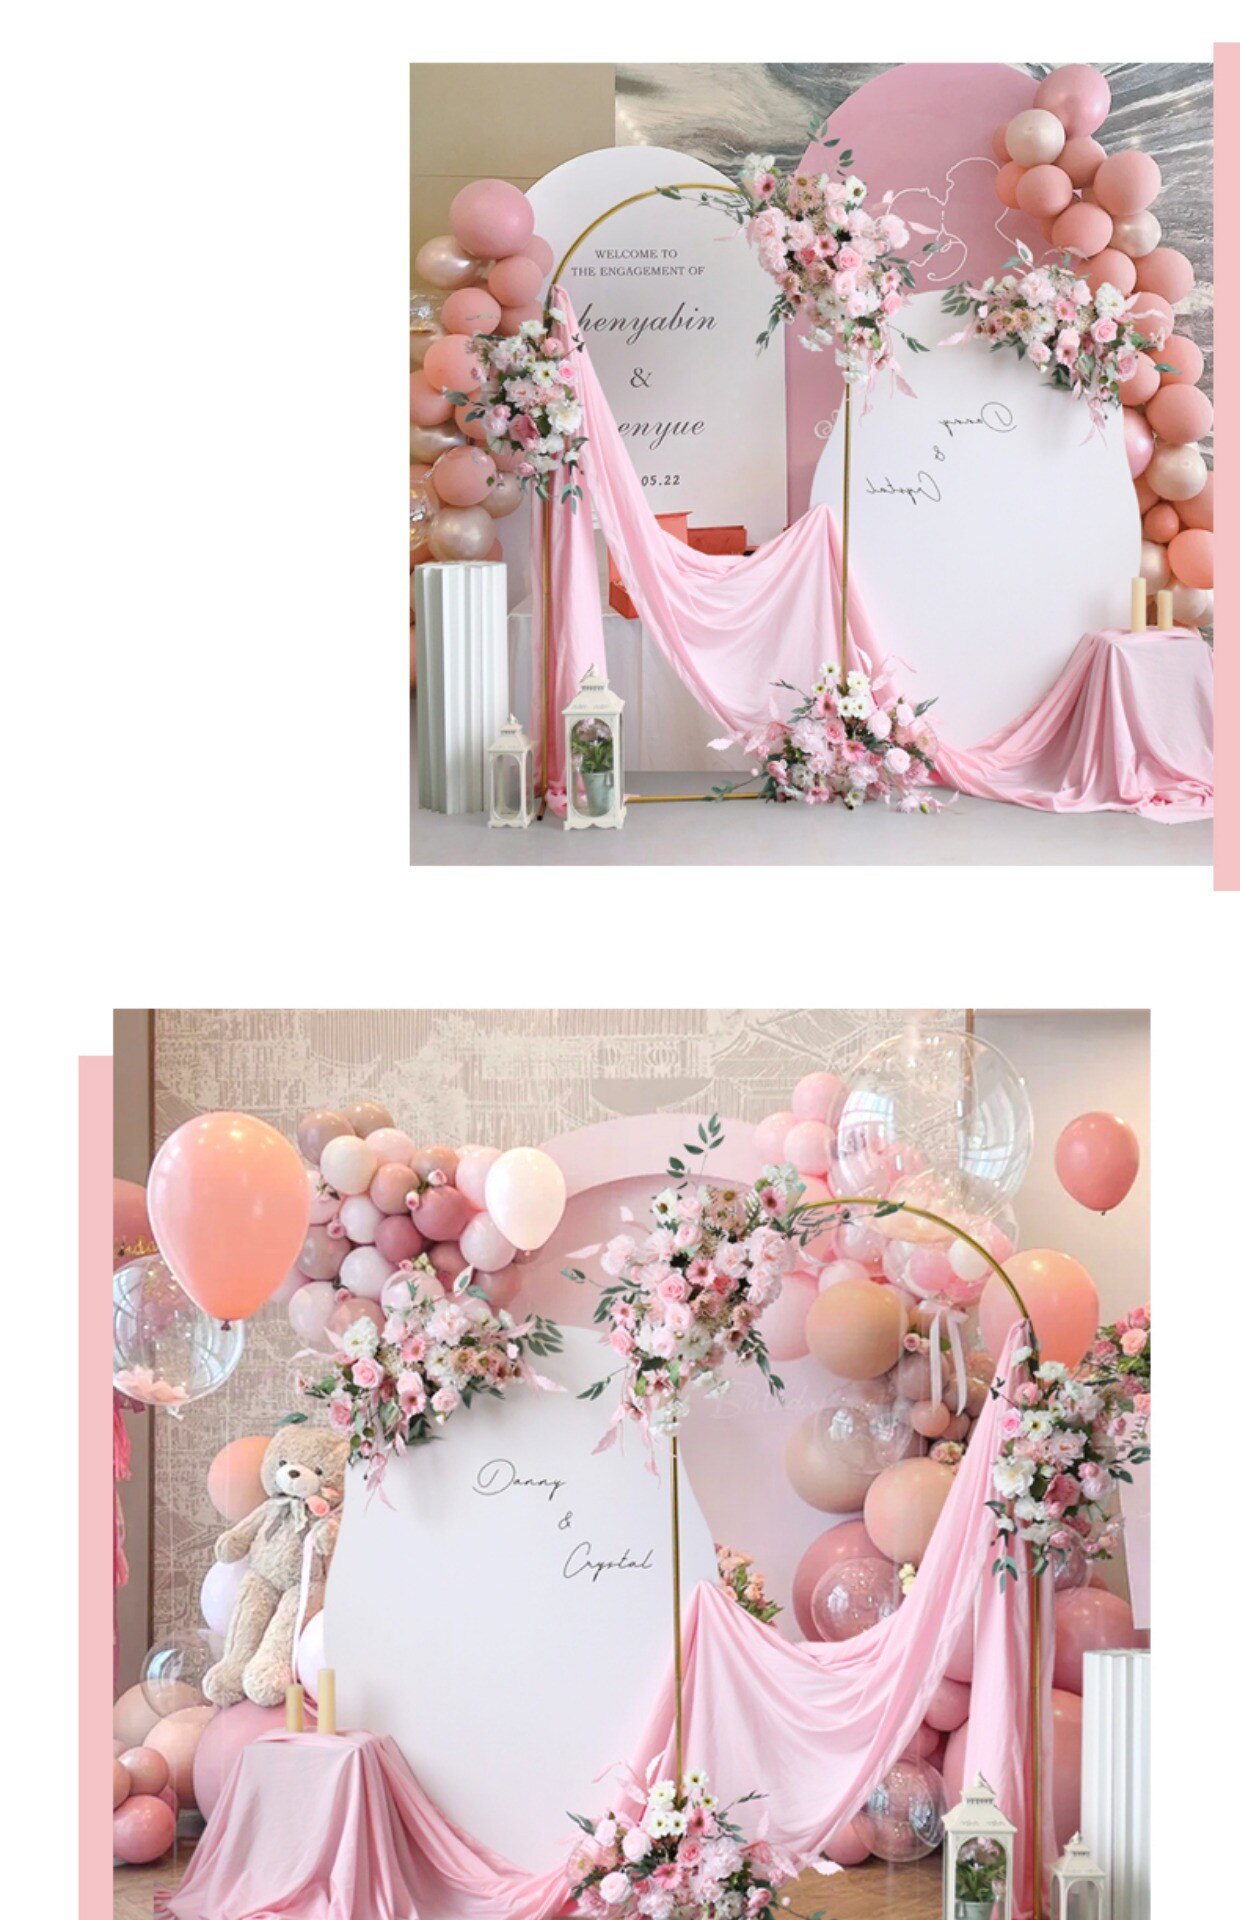 diy flower arrangements for wedding centerpieces7